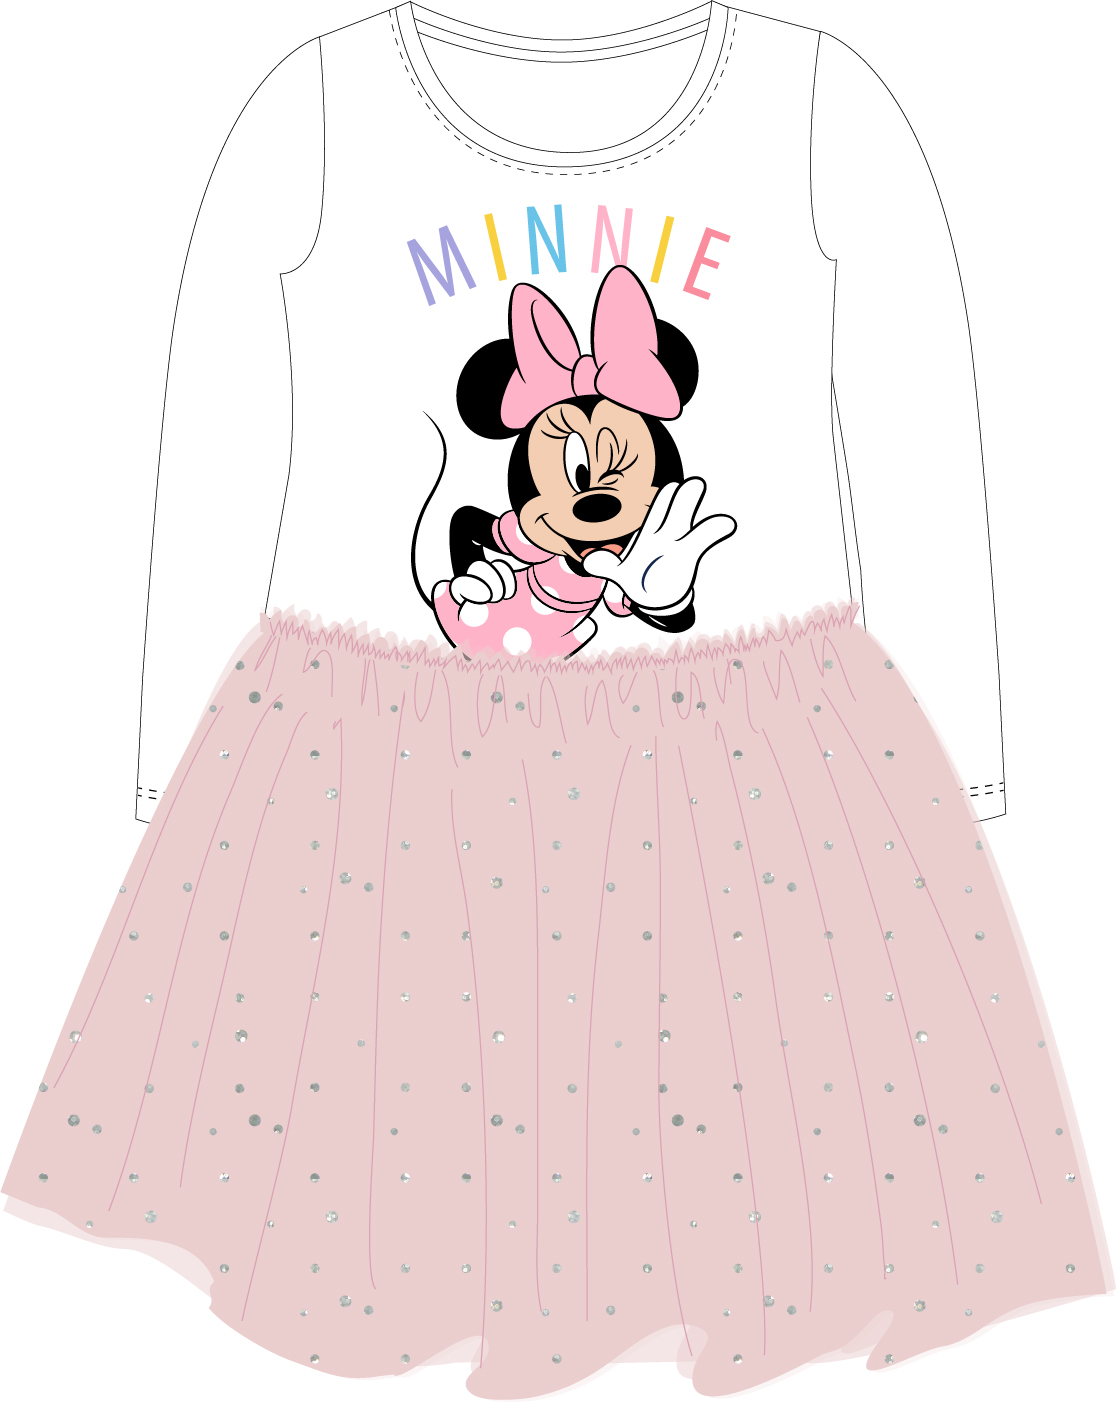 Minnie Mouse - licence Dívčí šaty - Minnie Mouse 5223B217, bílá / růžová Barva: Bílá, Velikost: 128